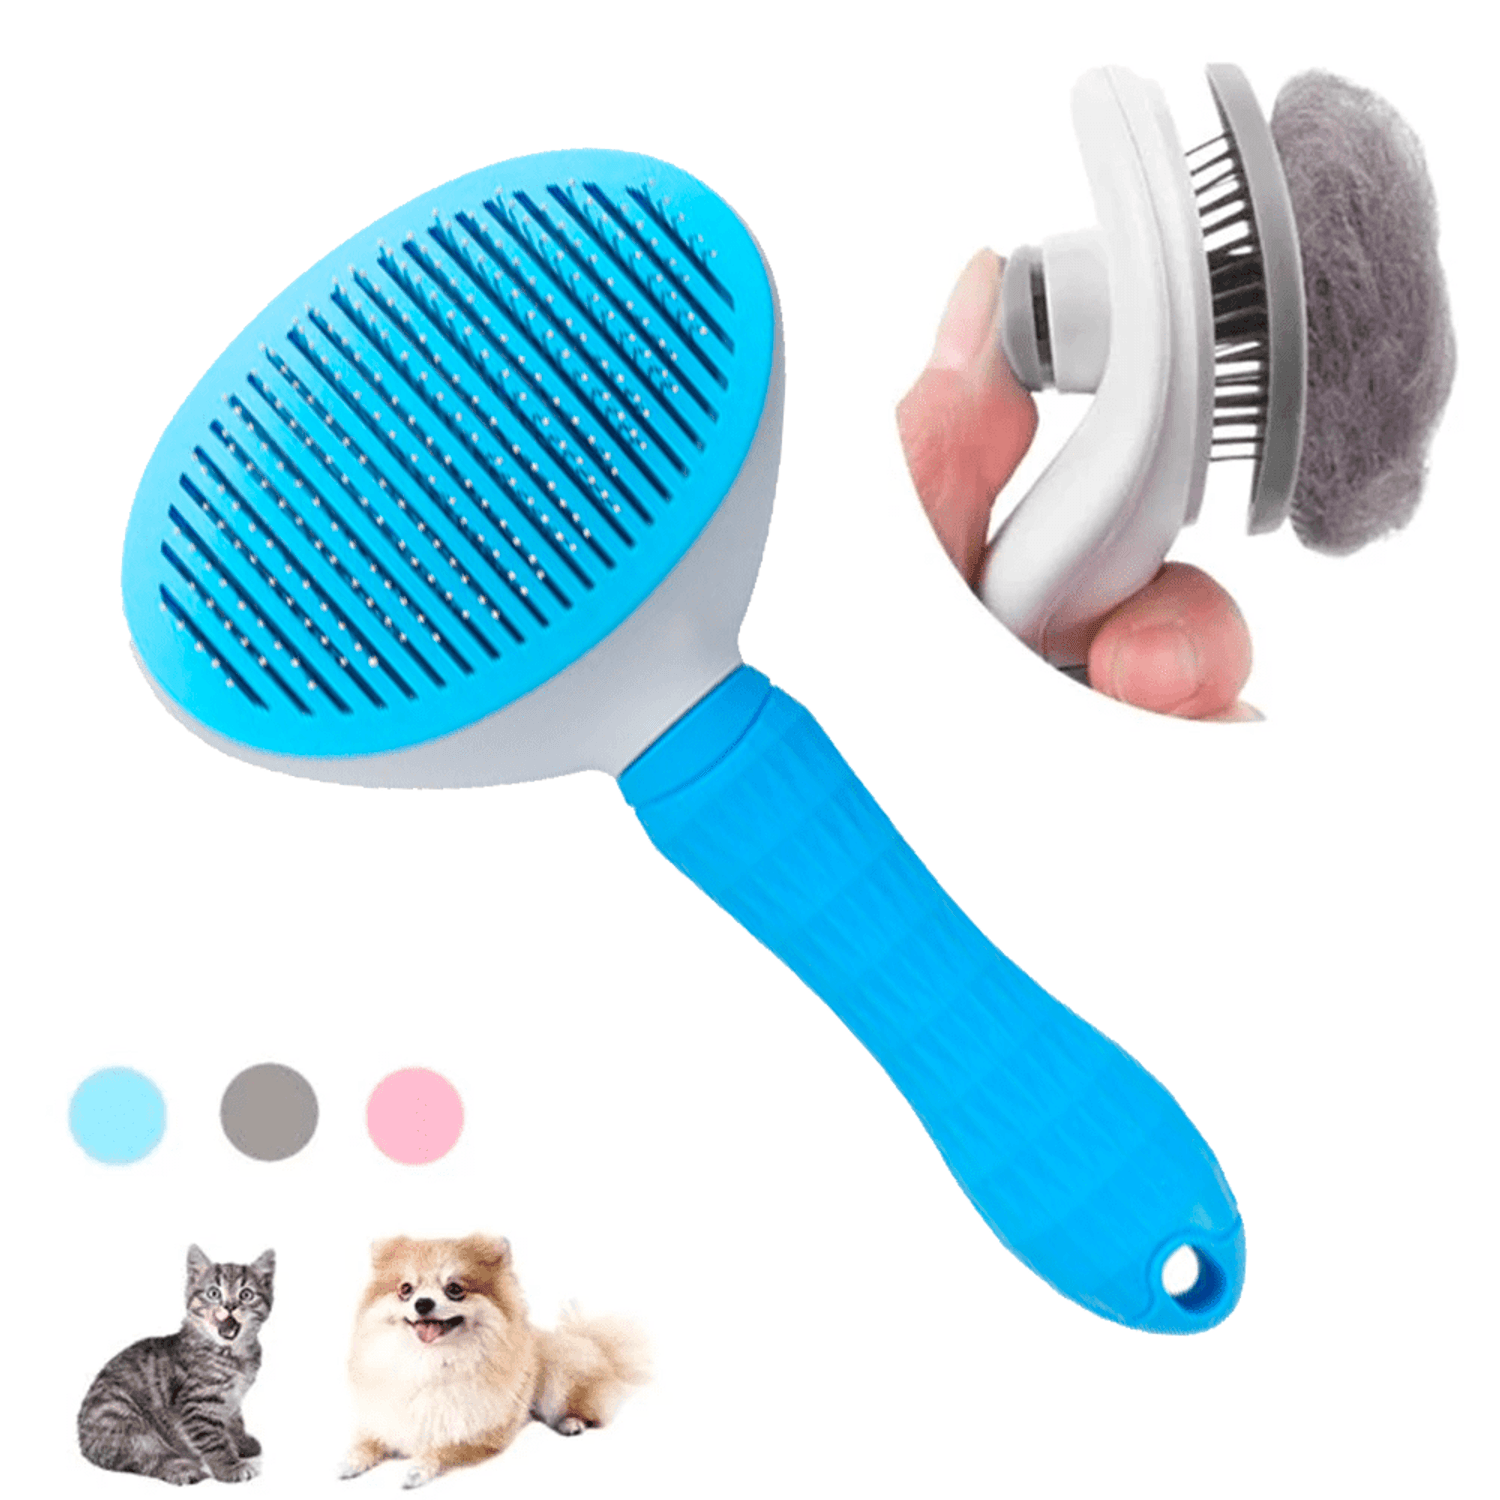 Cepillo quitapelusas para mascotas doble uso fácil limpieza removedor de  pelo para mascotas bidireccional para uso doméstico para piso ANGGREK Otros